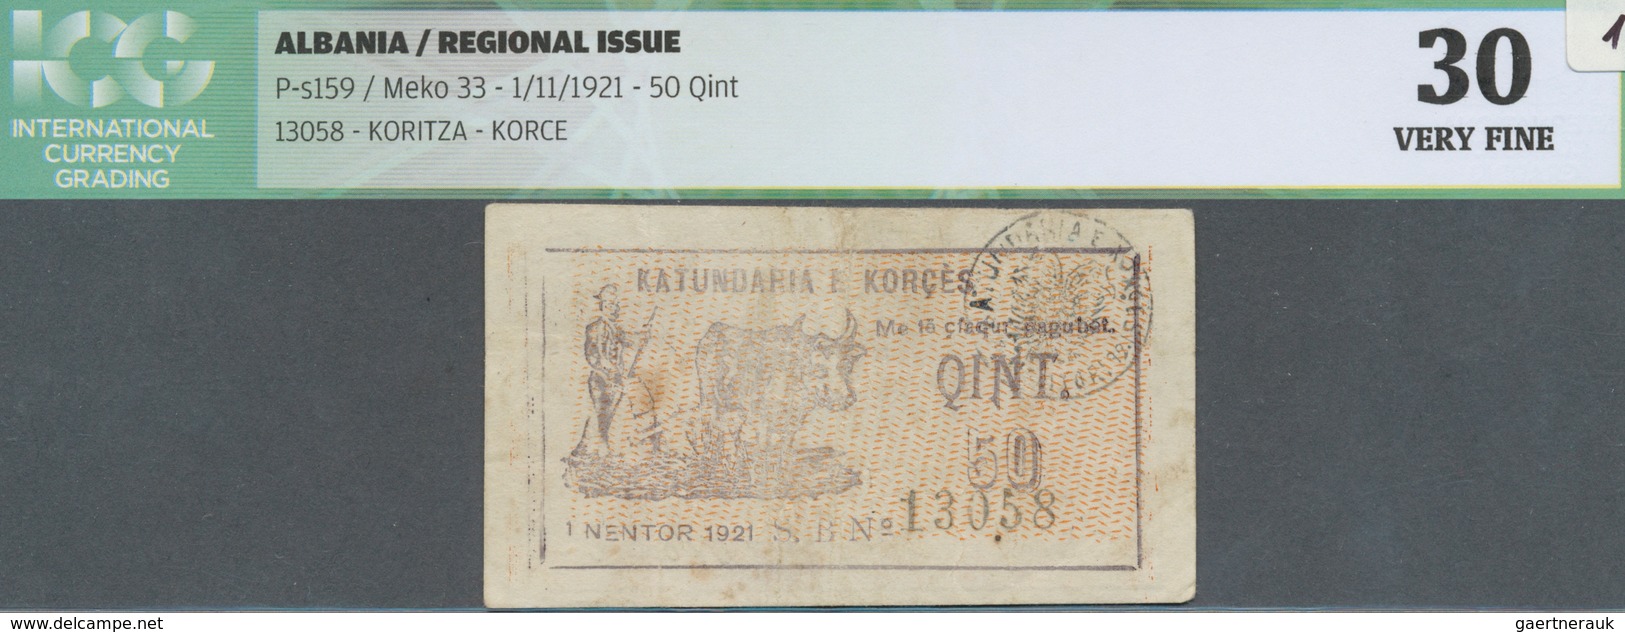 Albania / Albanien: Seldom Seen Regional Issue Of 50 Qint 01.11.1921 Koritza / Korce P. S159, Serial - Albania